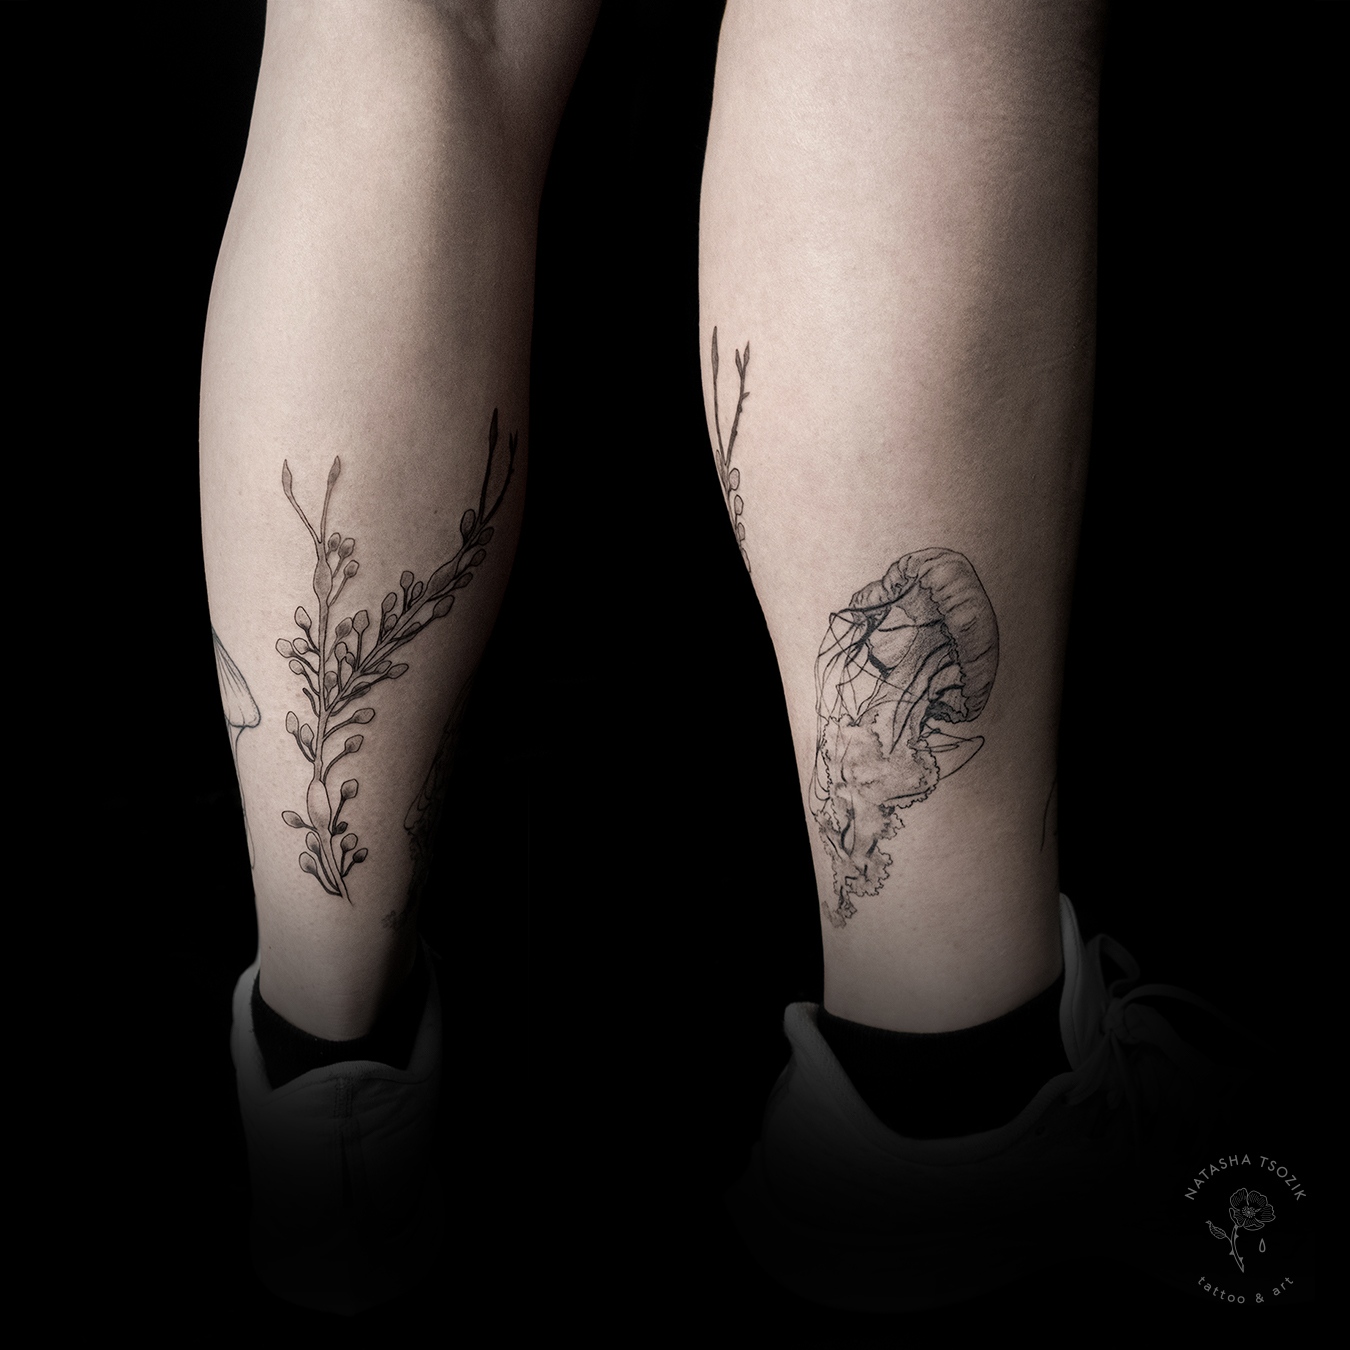 Seaweed and Jellyfish tattoos by Natasha Tsozik